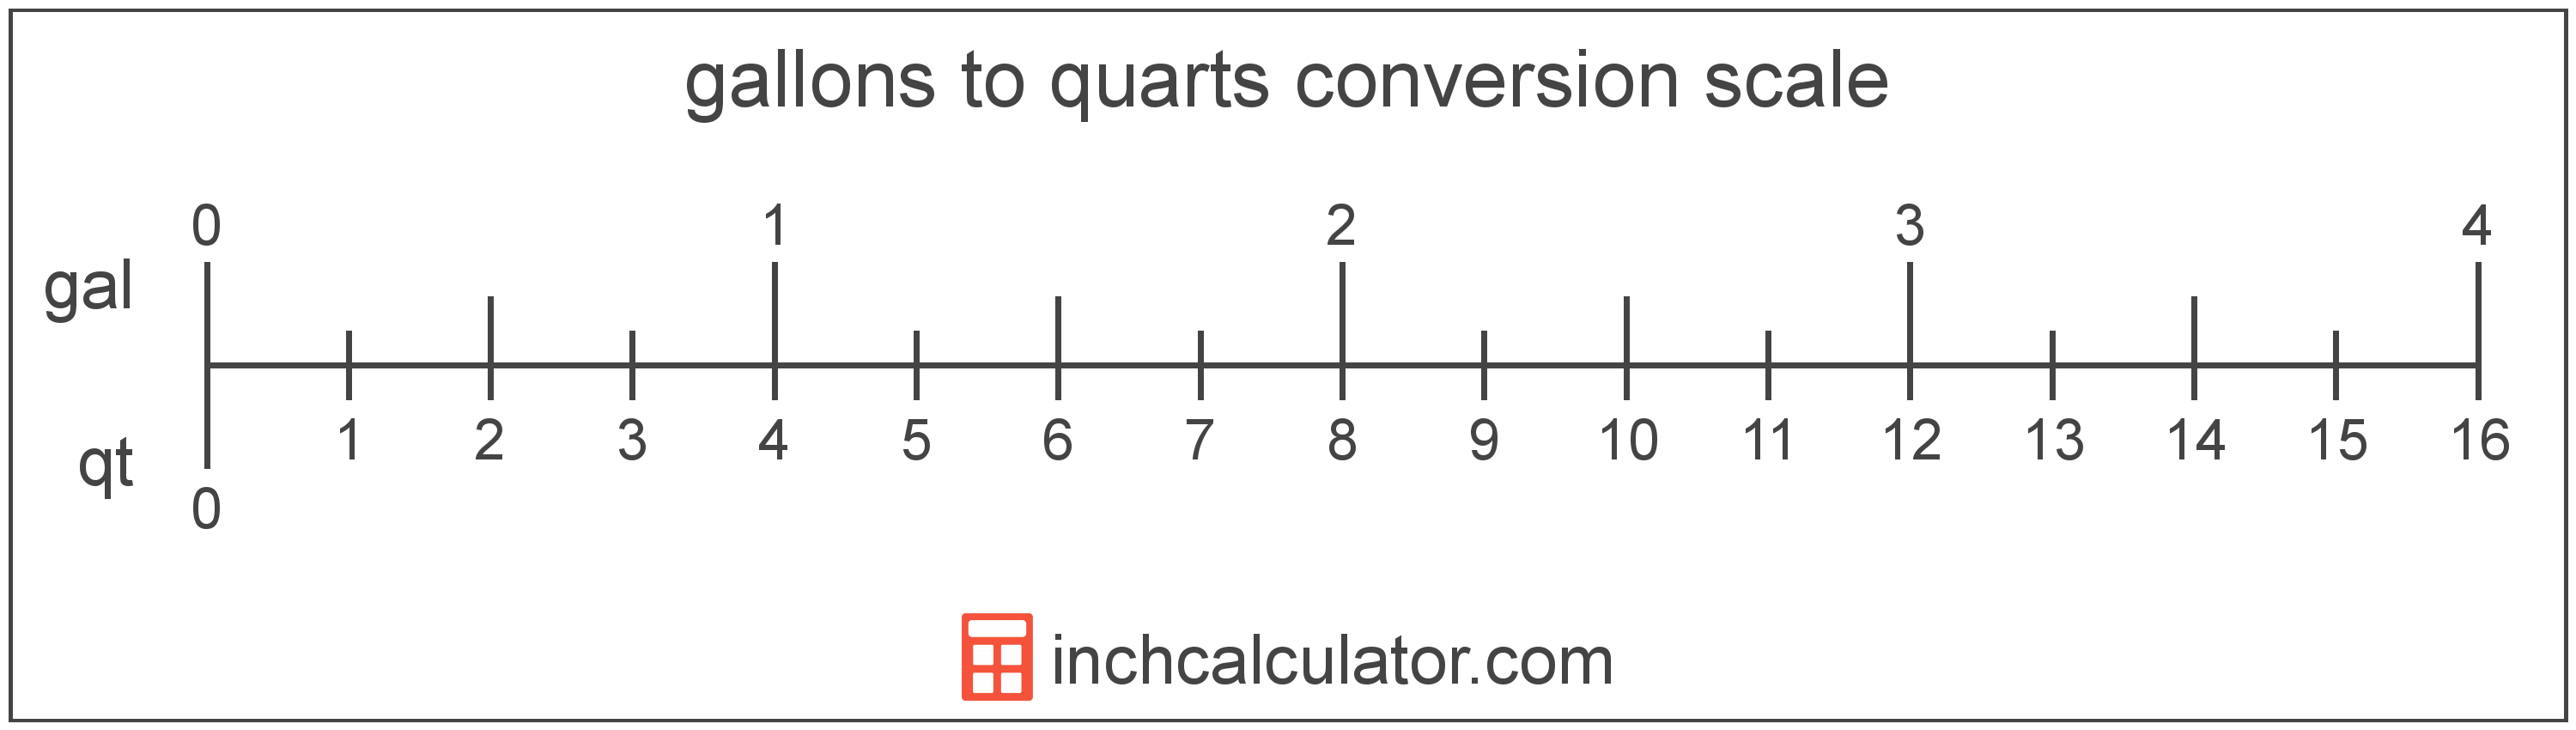 Gallons To Quarts Conversion Chart